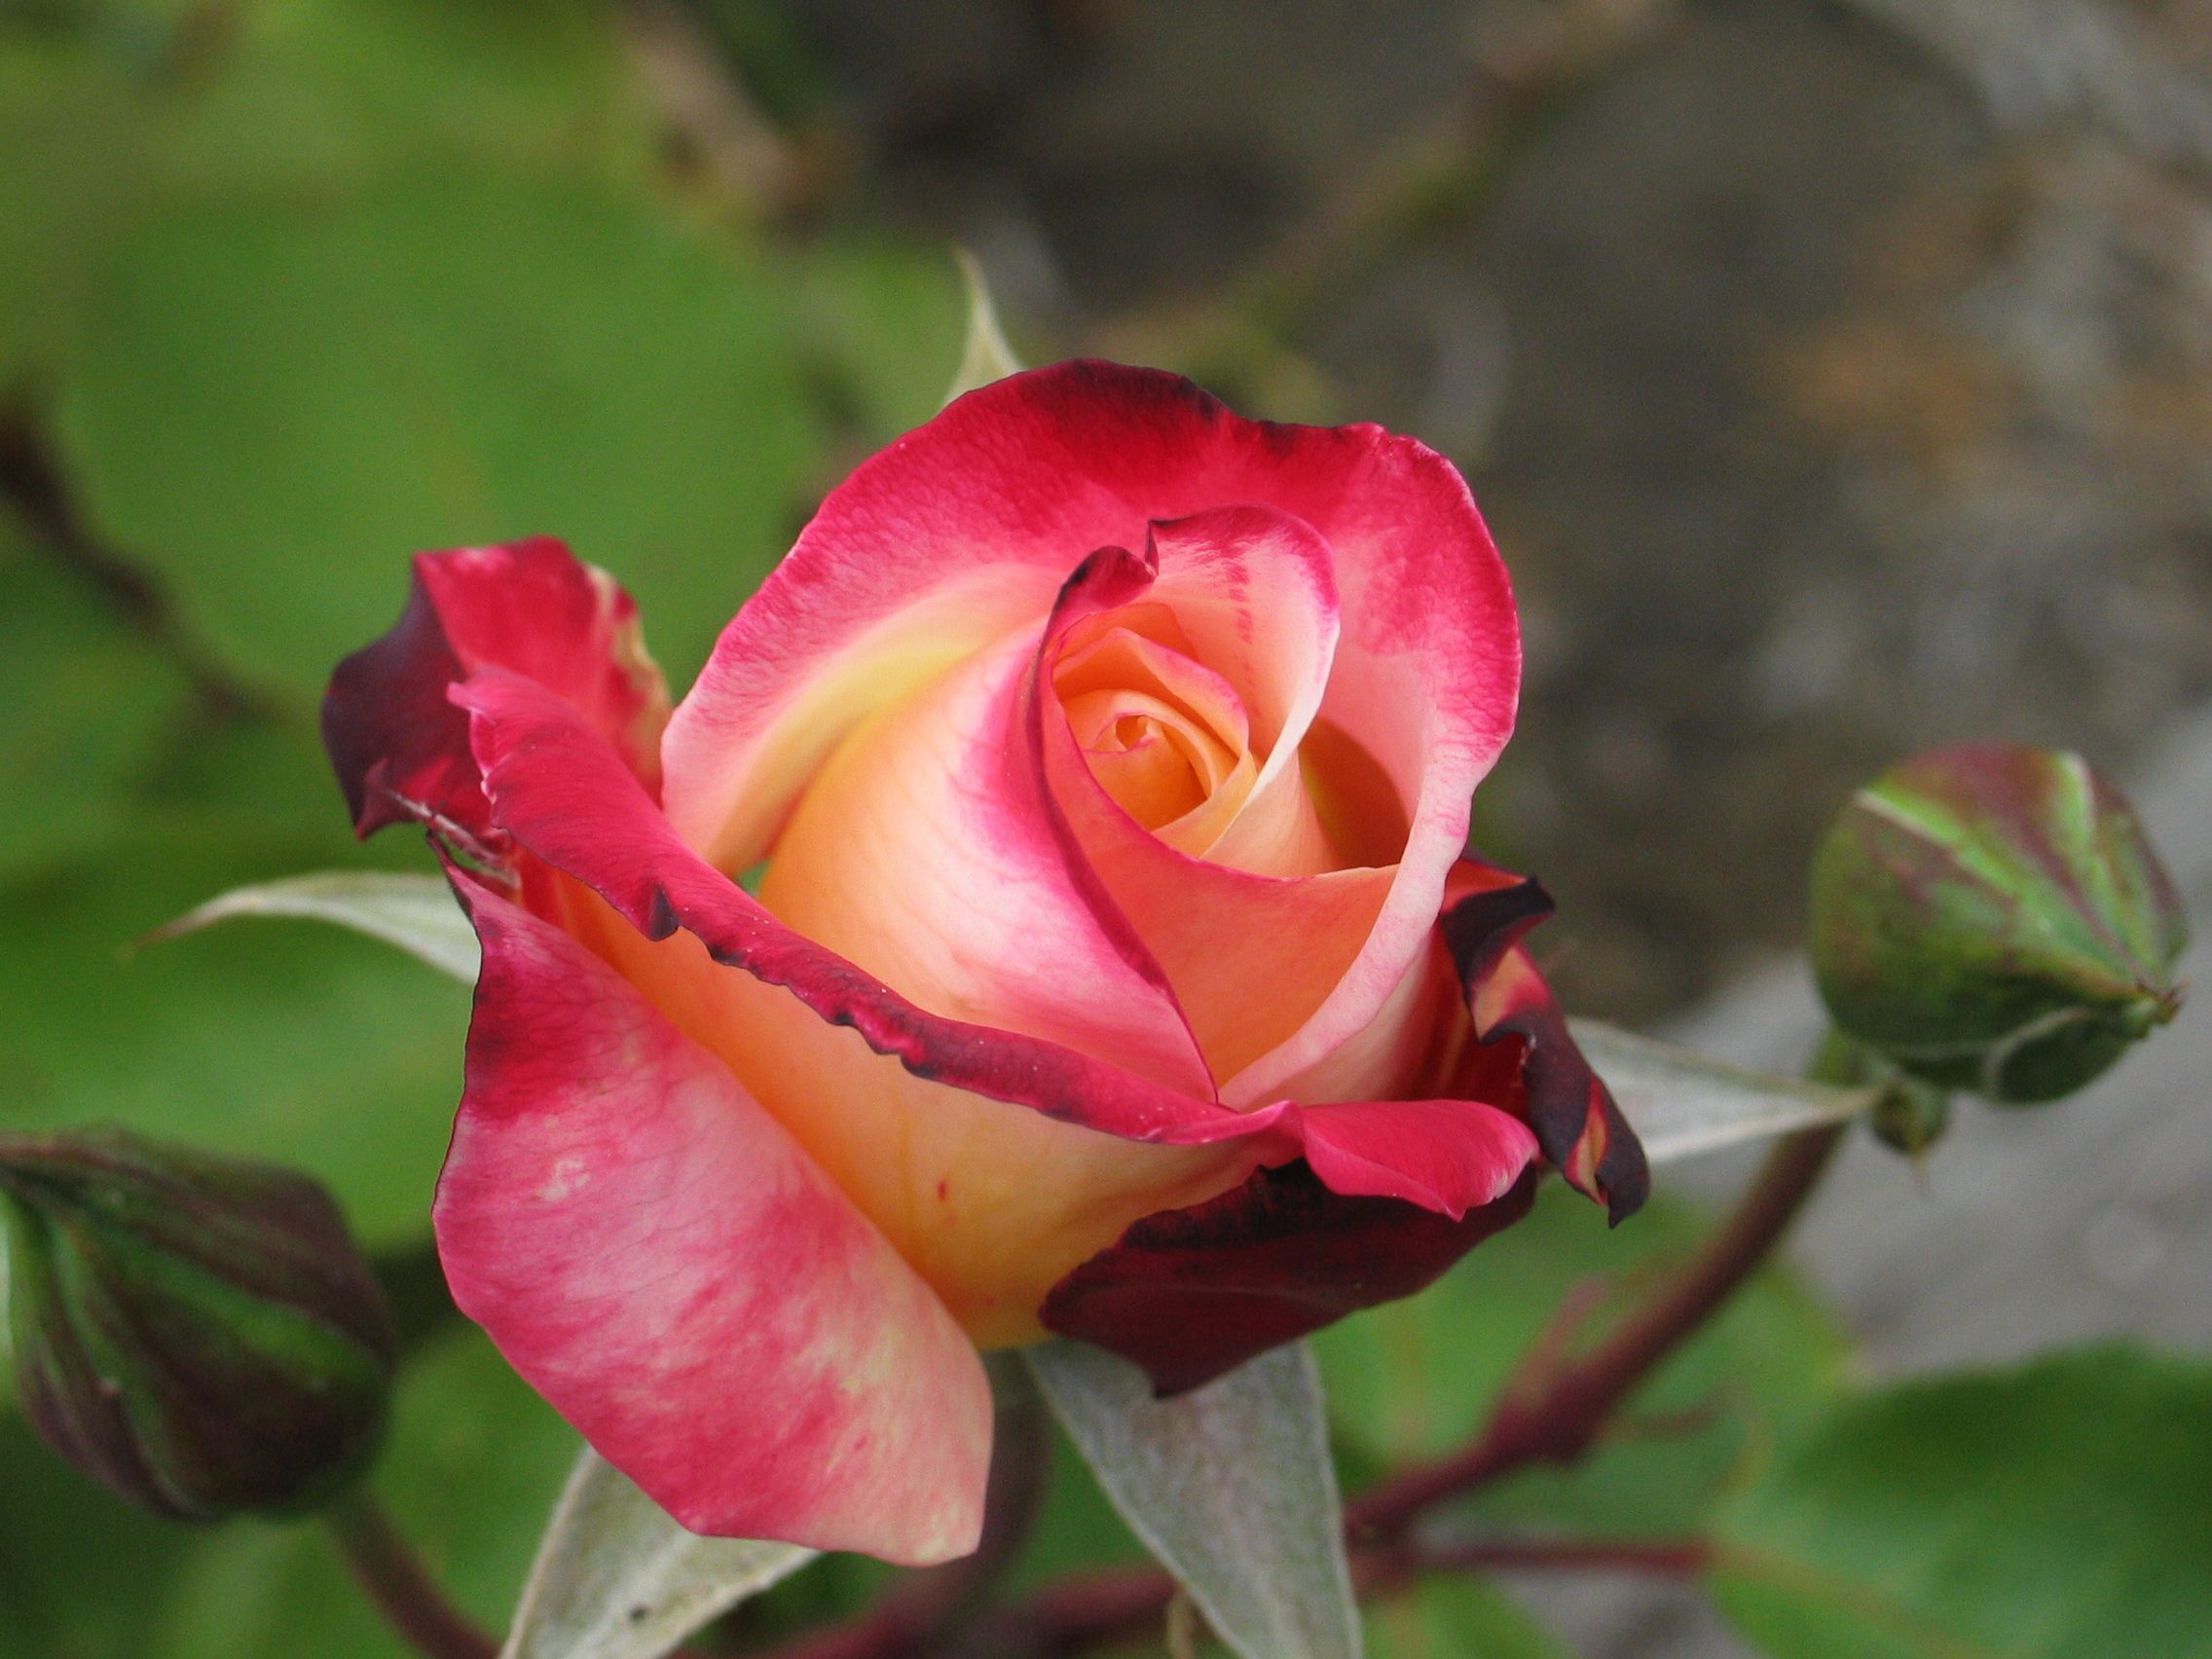 Роза чайно-гибридная Веласкес